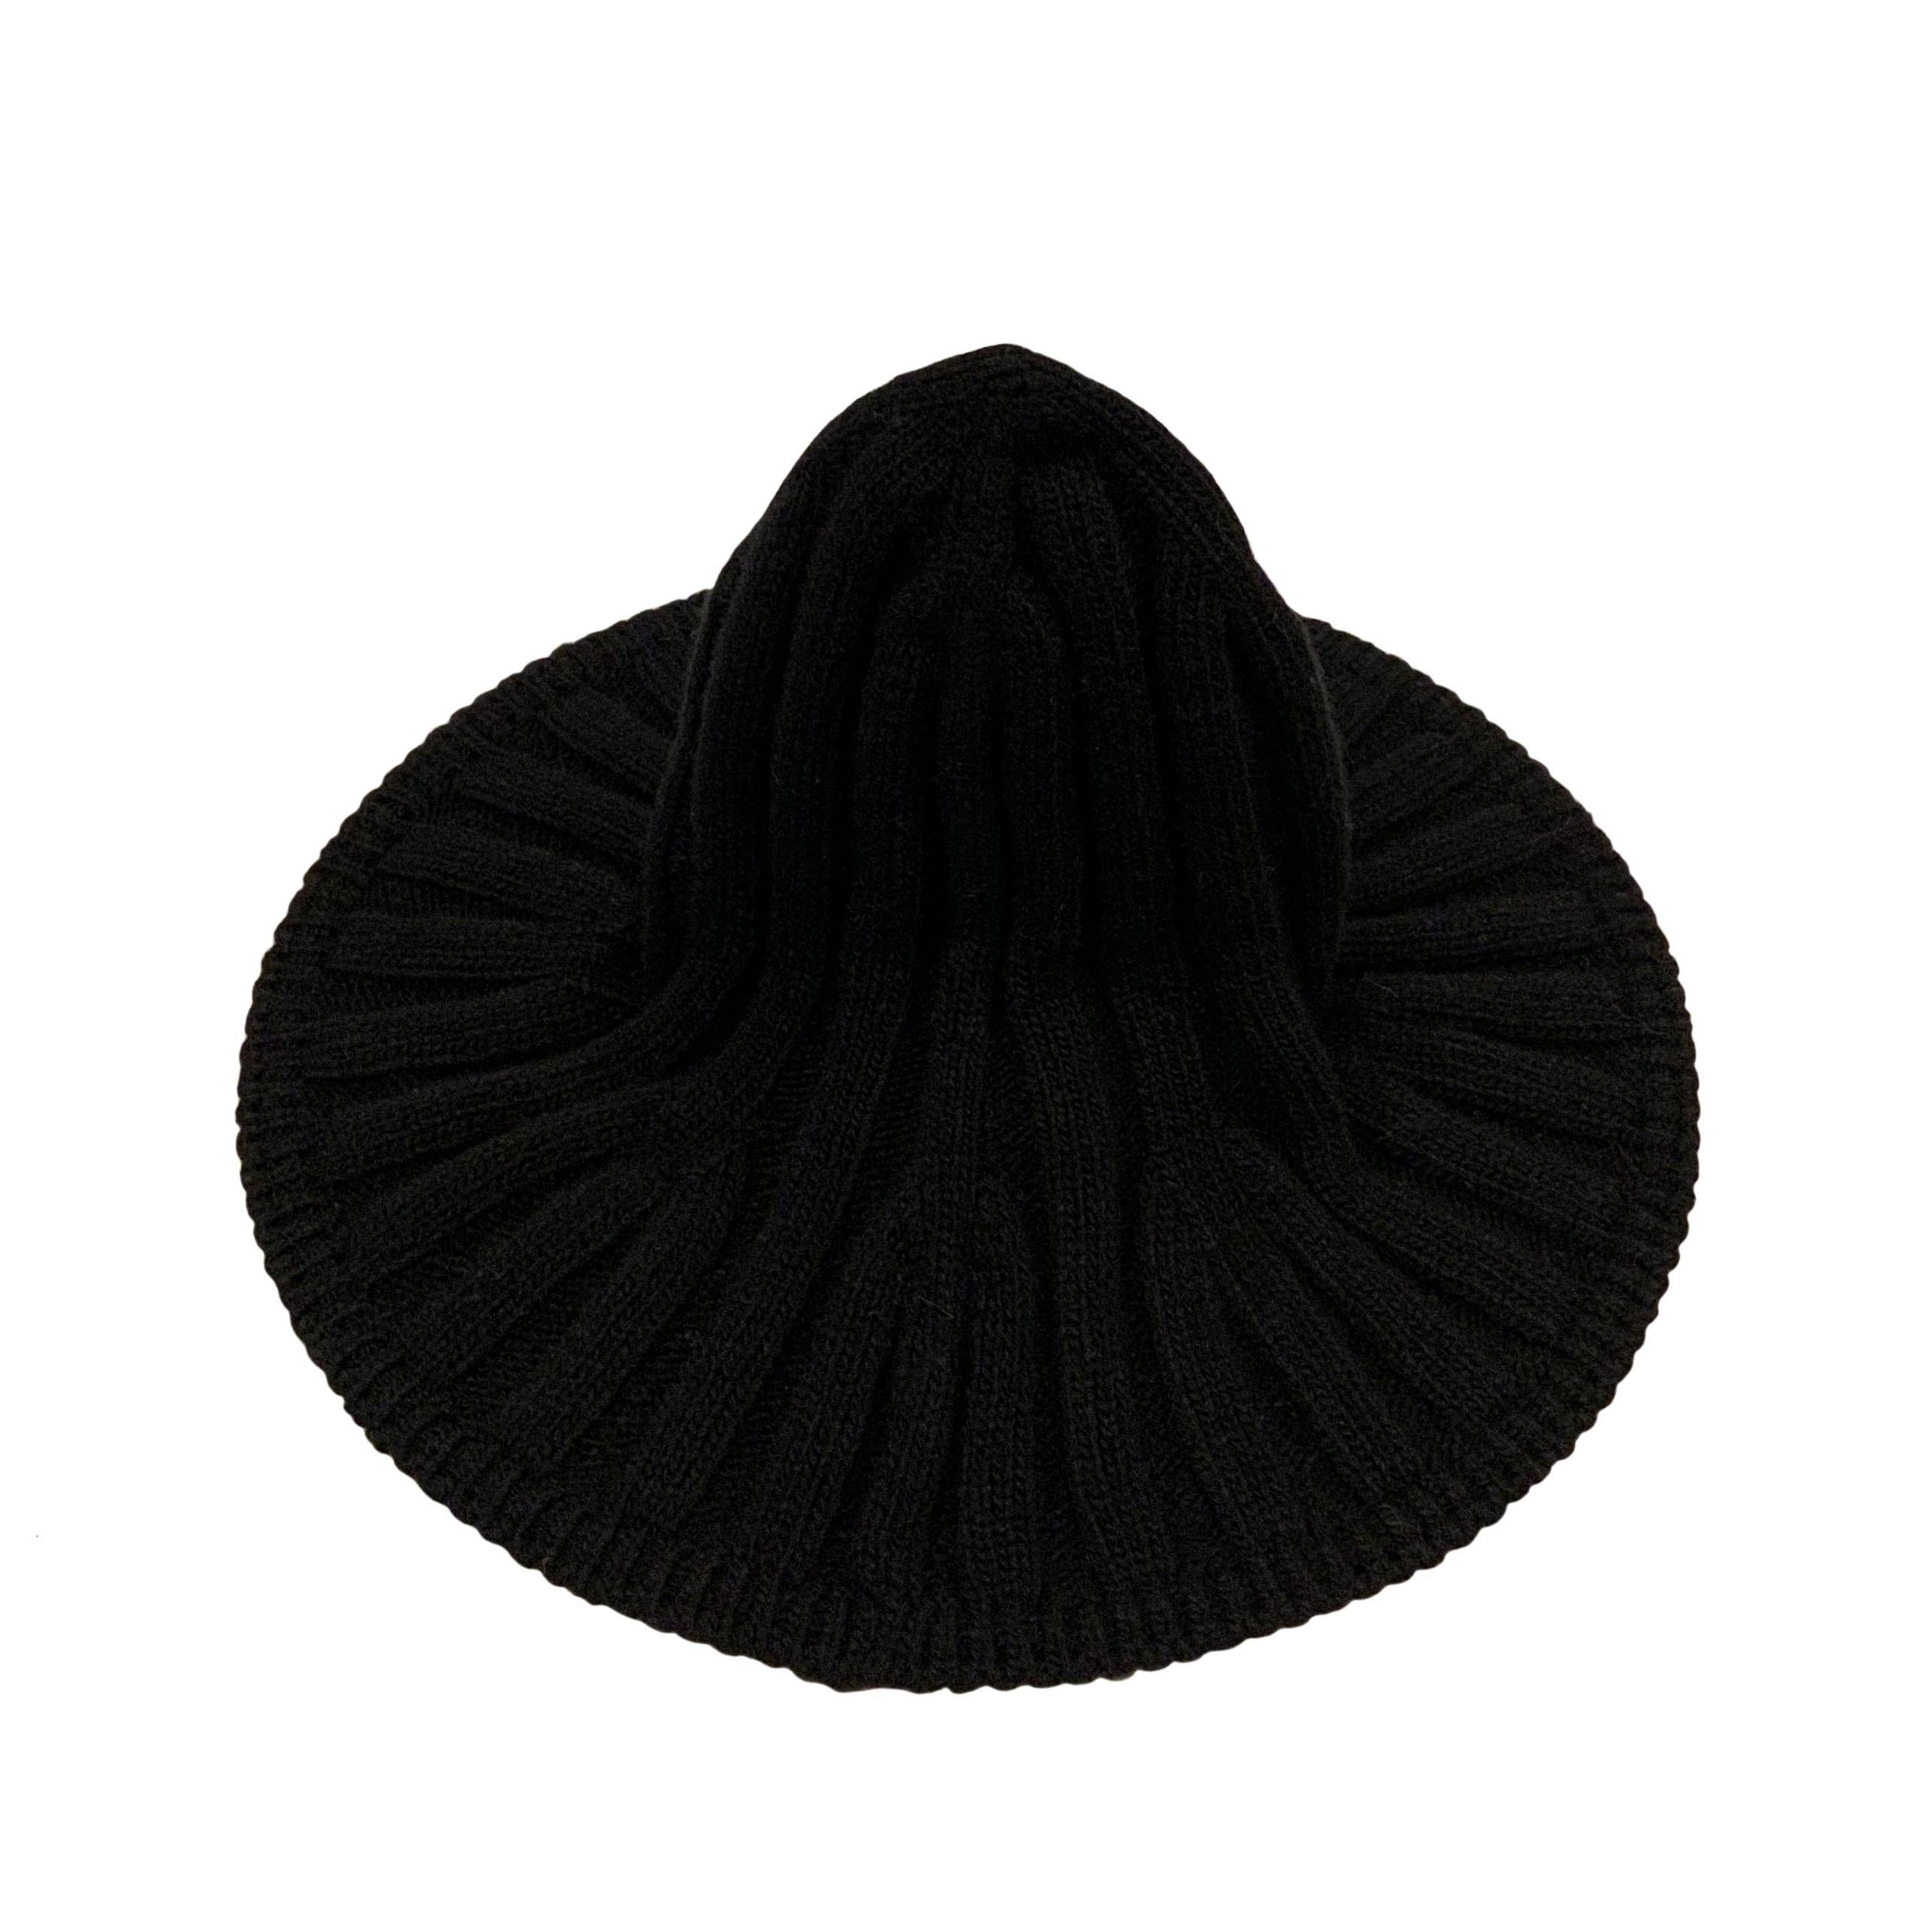 Black Christian Dior Pre-Fall 2019 Arty Heather Knit Tulip Hat